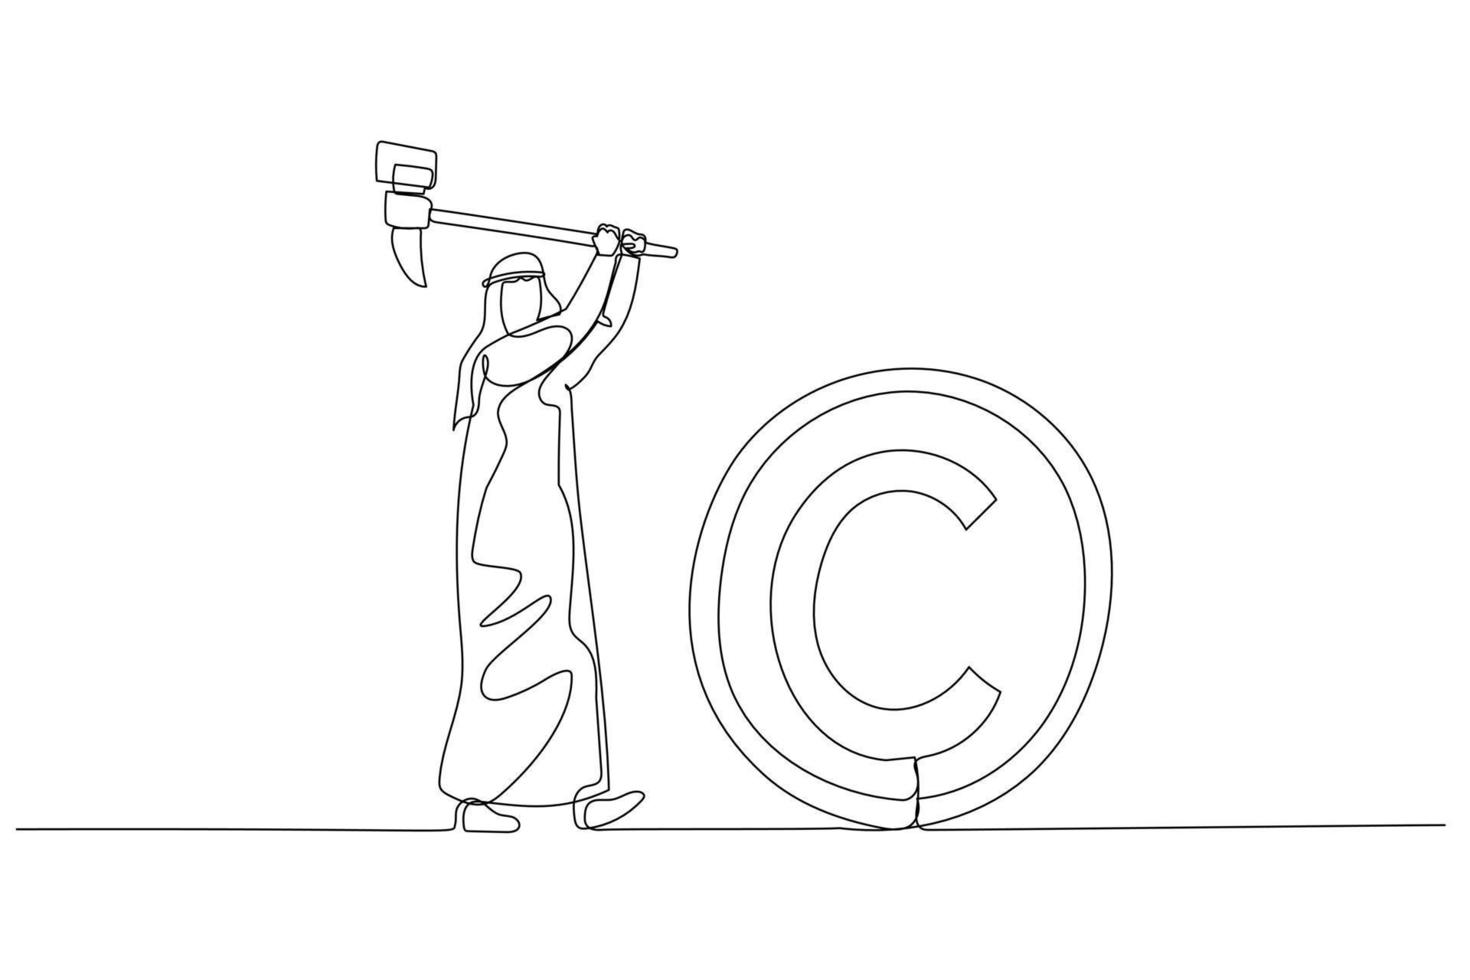 dibujos animados de árabe empresario con martillo tratar a aplastar derechos de autor signo. concepto de derechos de autor infracción. continuo línea Arte vector